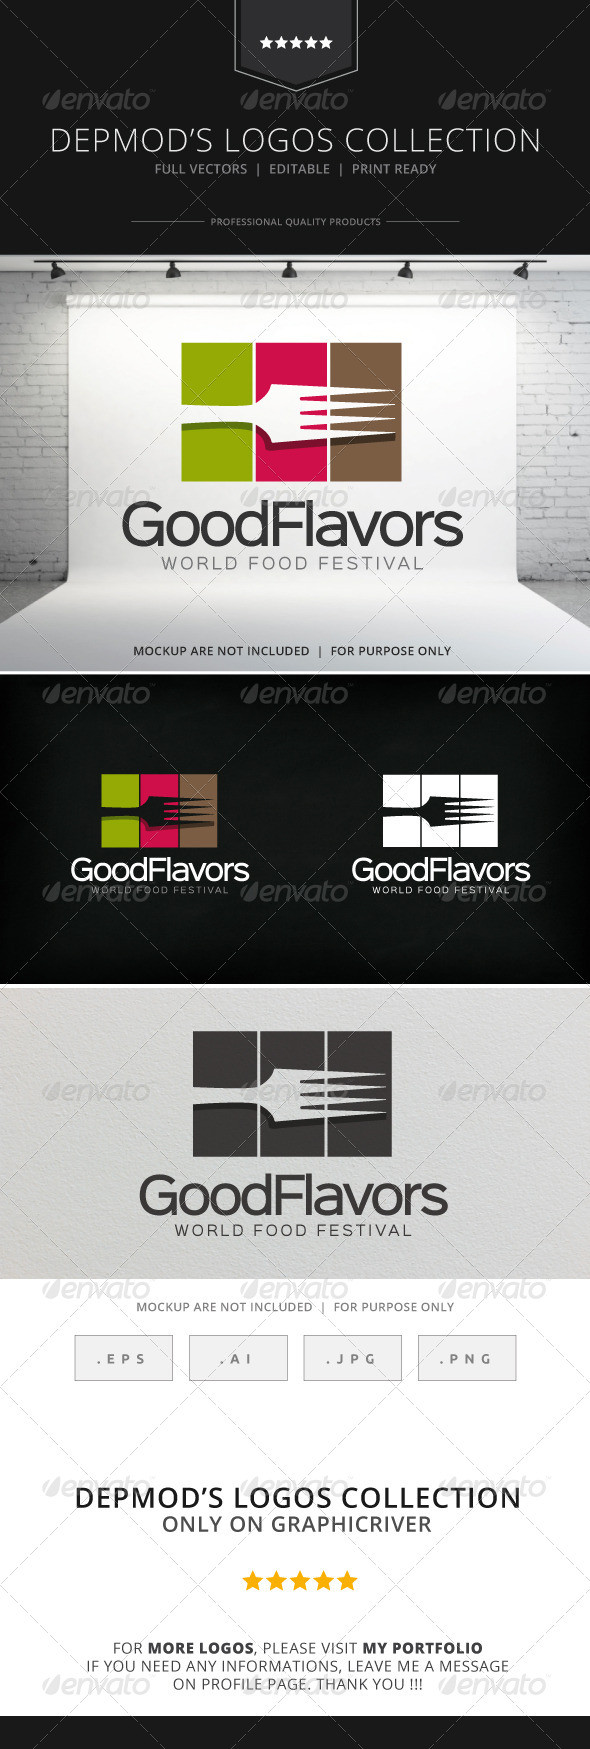 Good flavors logo